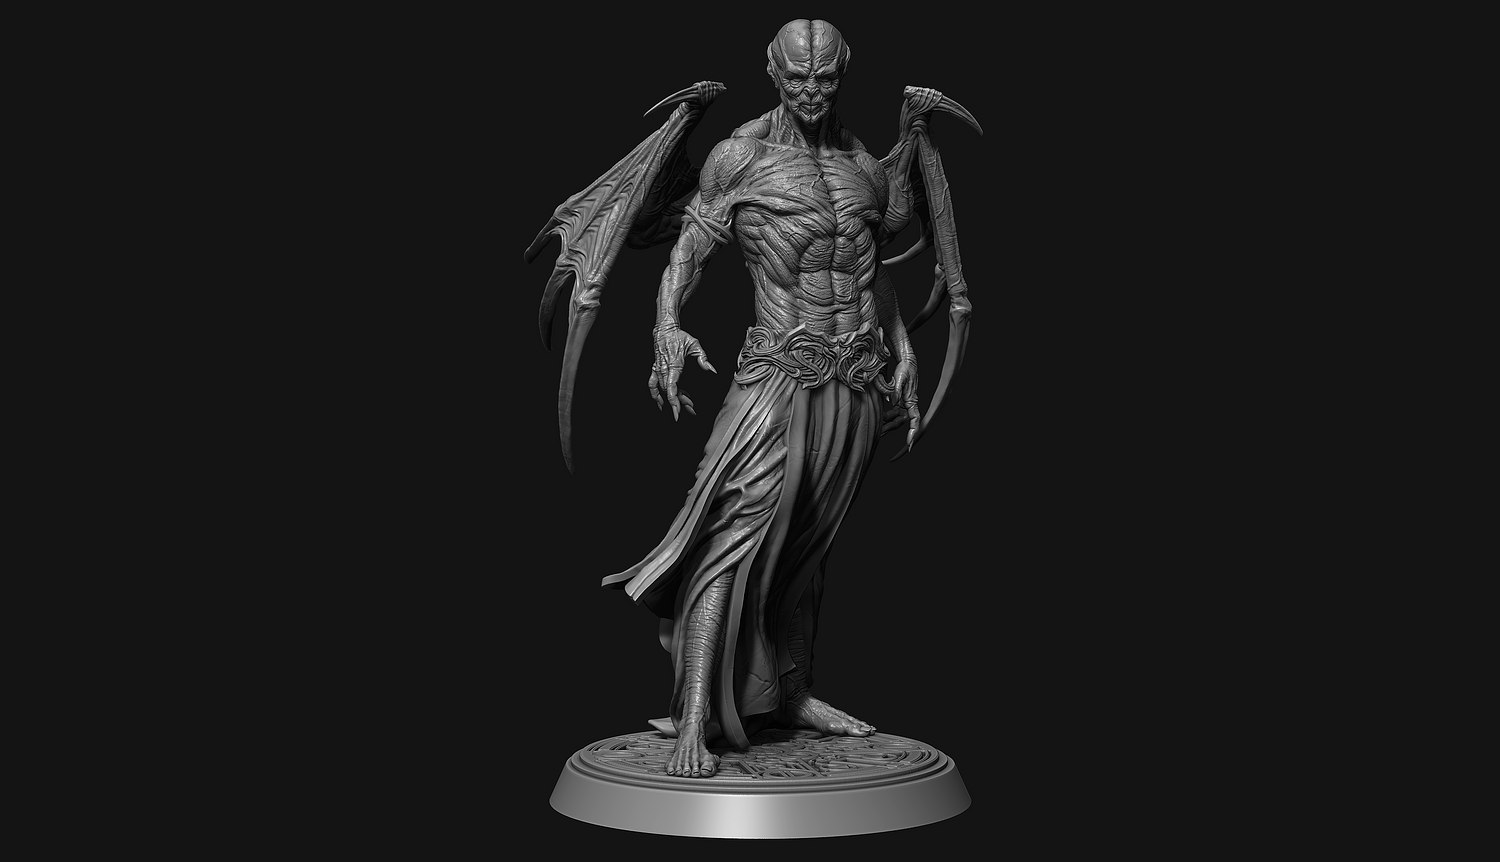 Marcus Vampire from Underworld